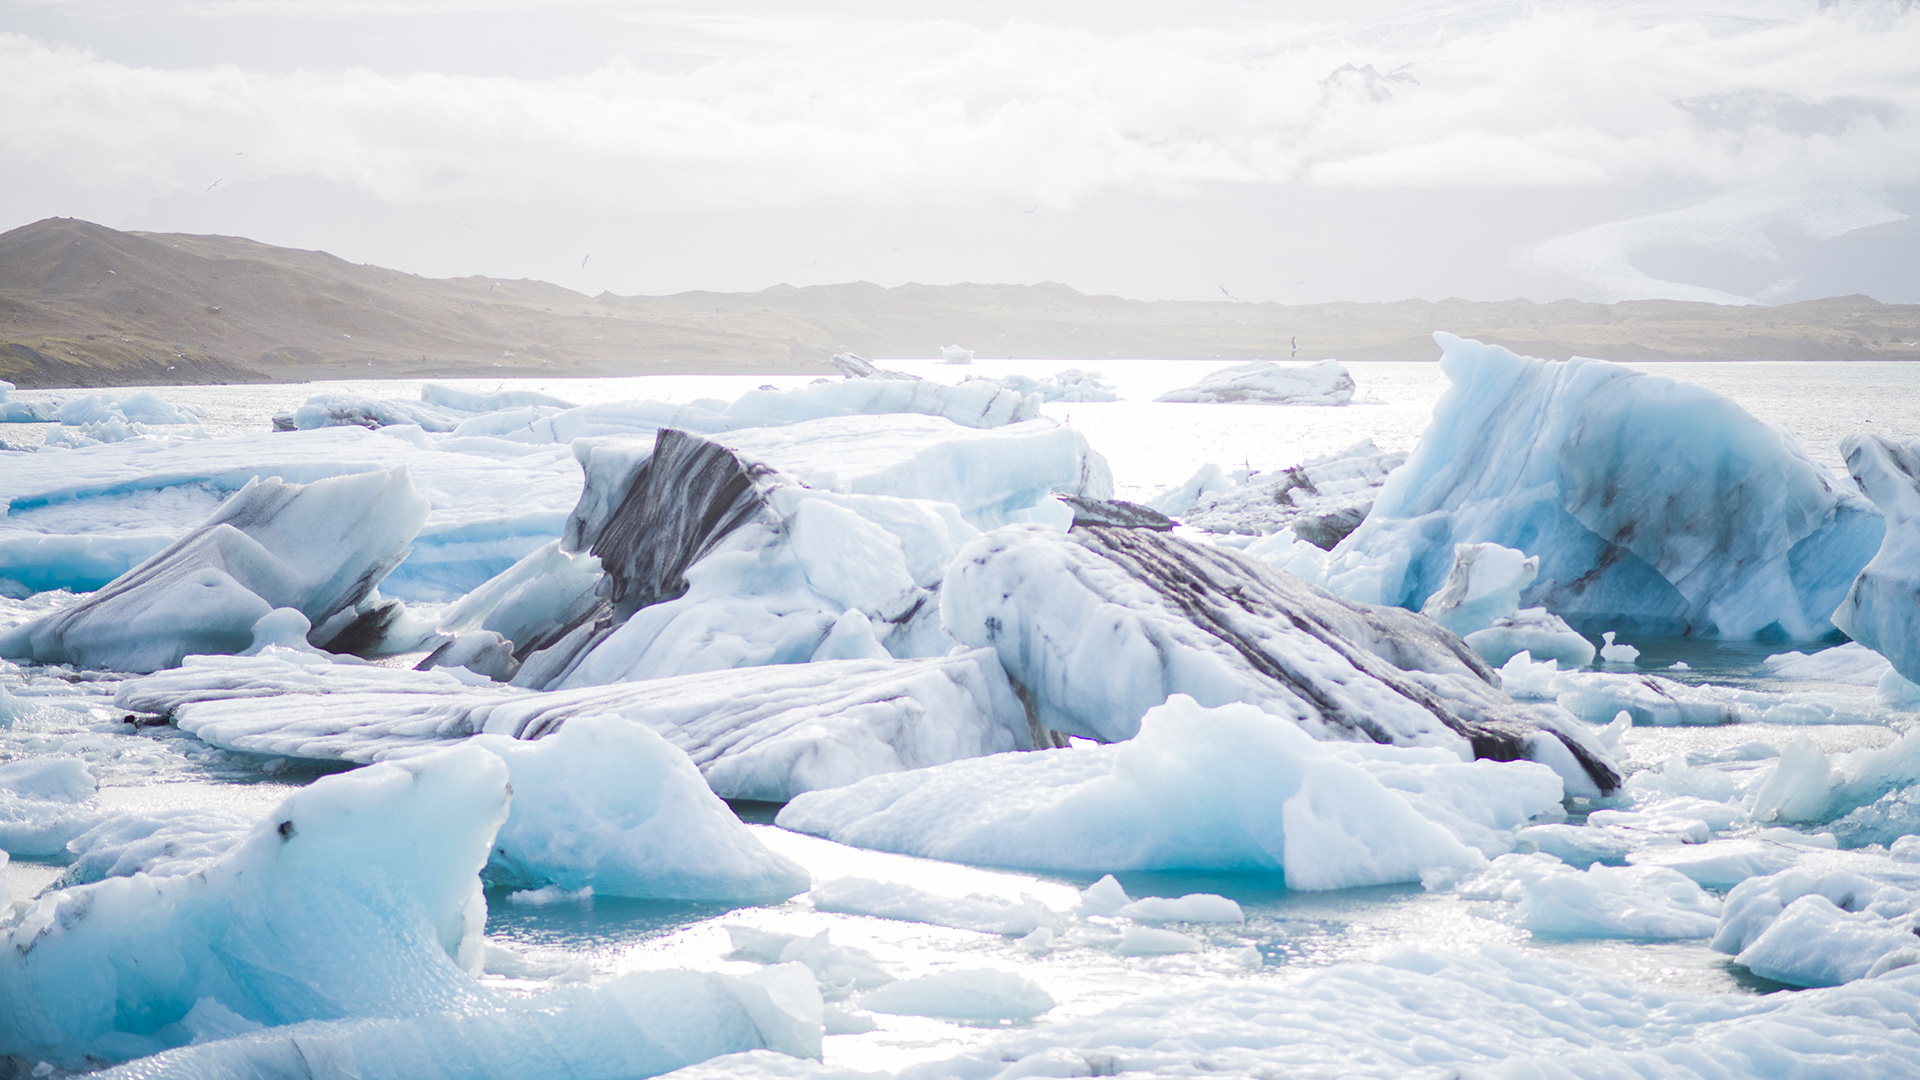 Ewiges Eis - Eisverluste am Rand können gesamte Antarktis erschüttern